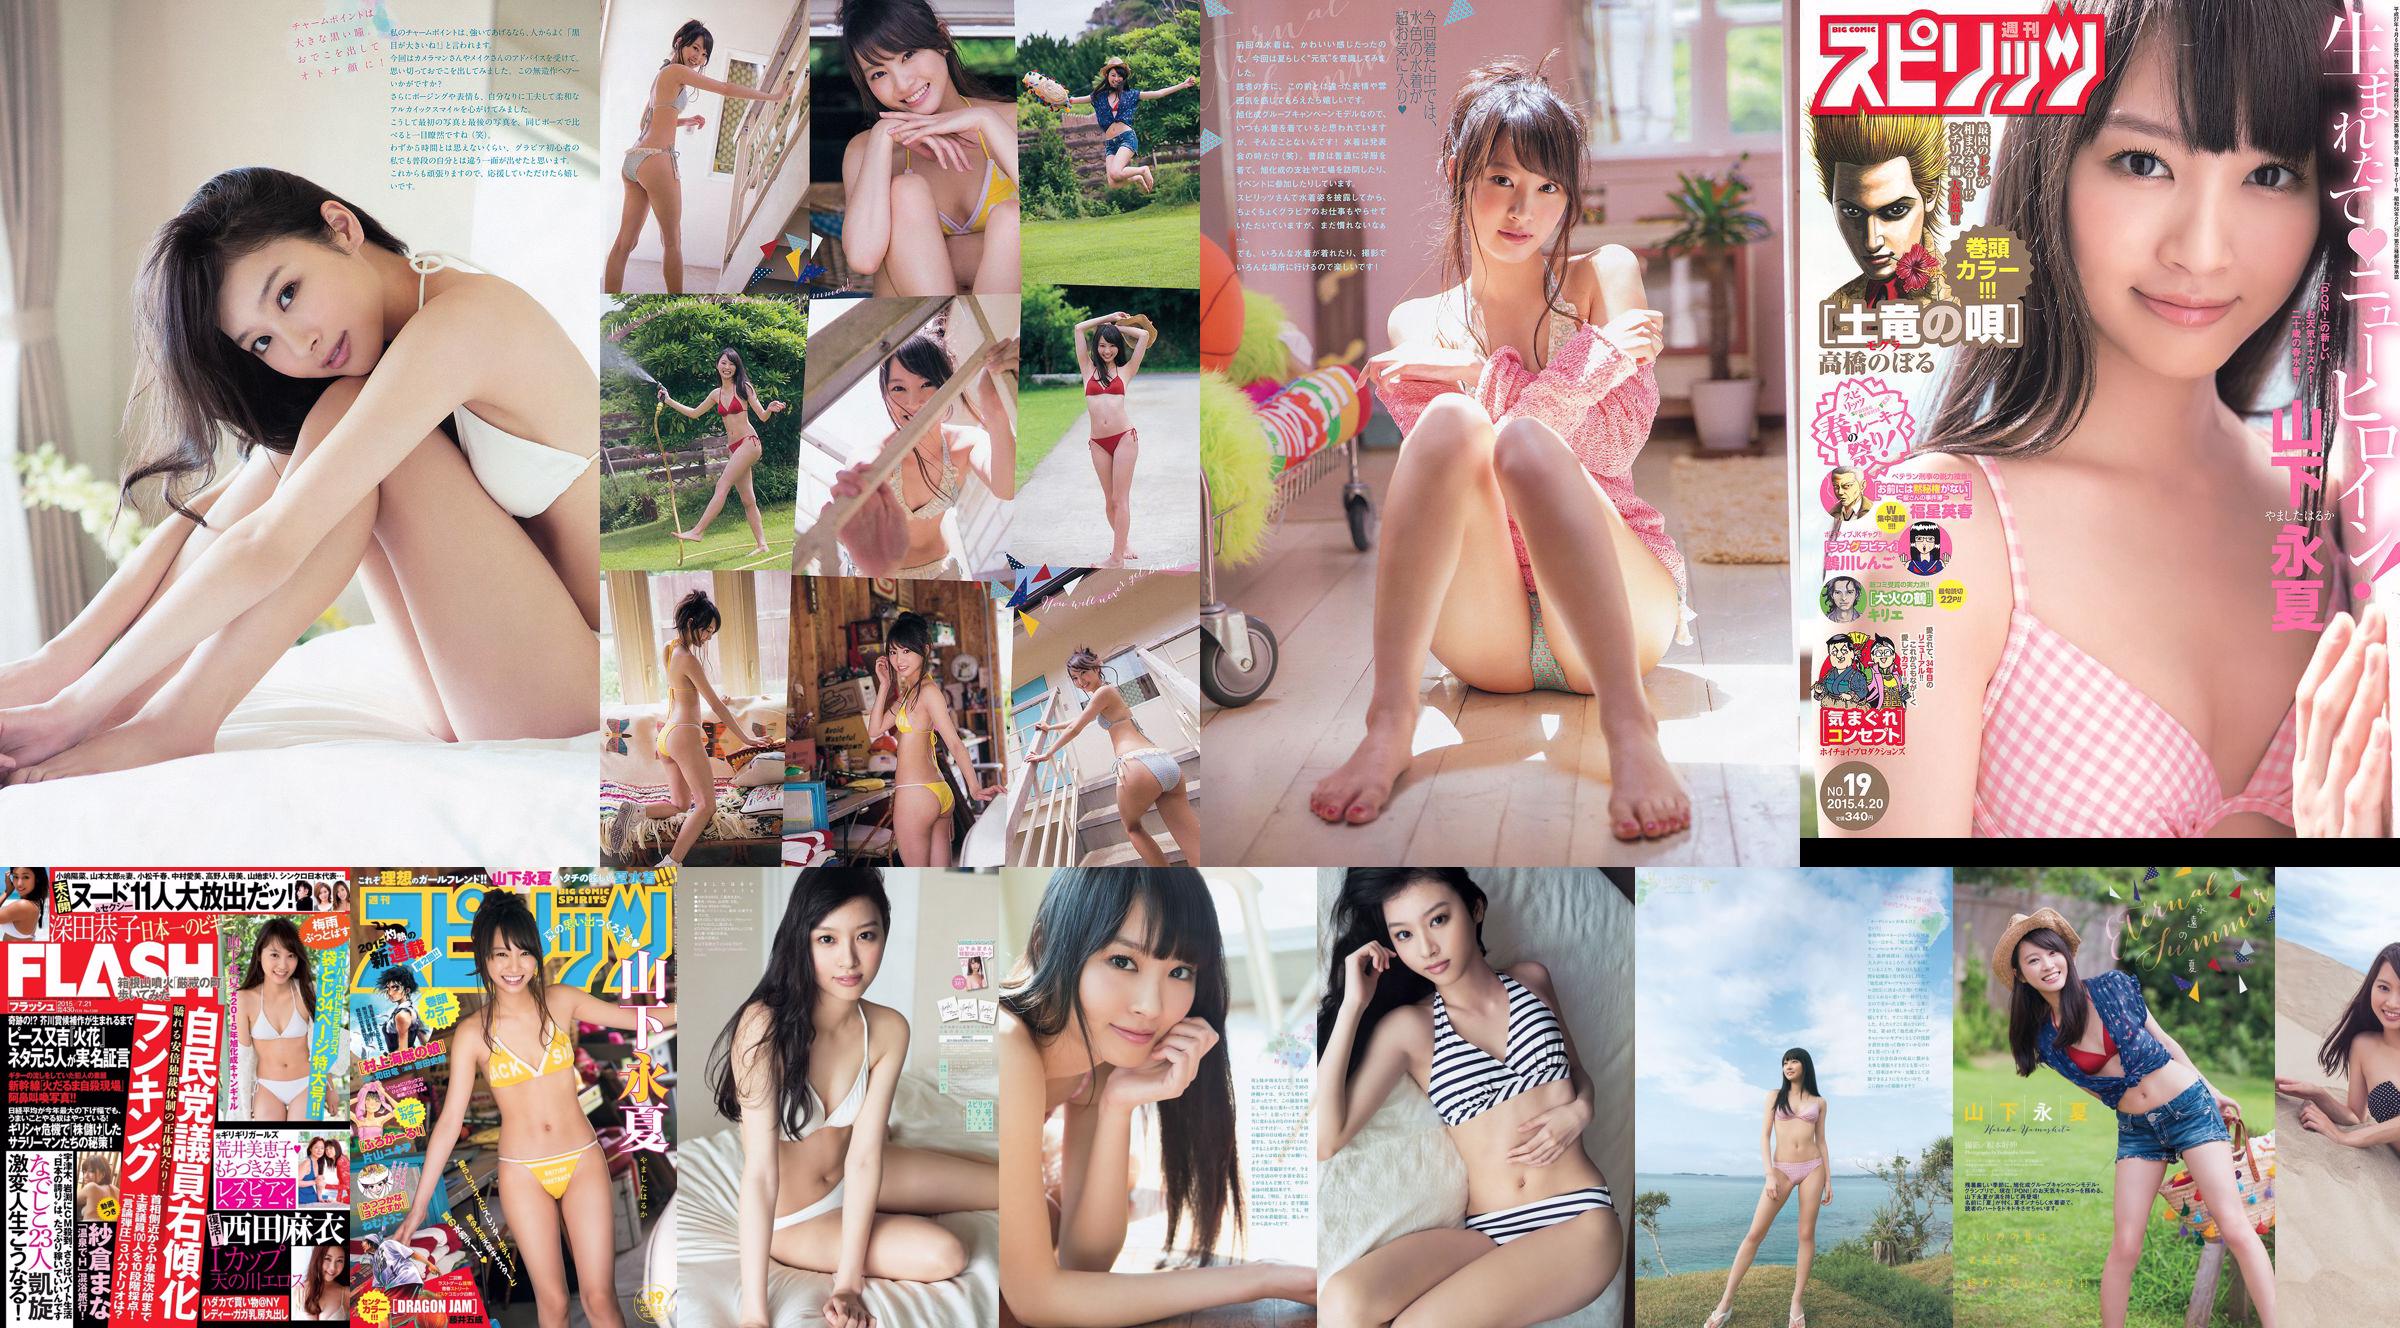 [Cotygodniowy Big Comic Spirits] Yamashita Yongxia 2015 nr 39 Photo Magazine No.fbcbcb Strona 1